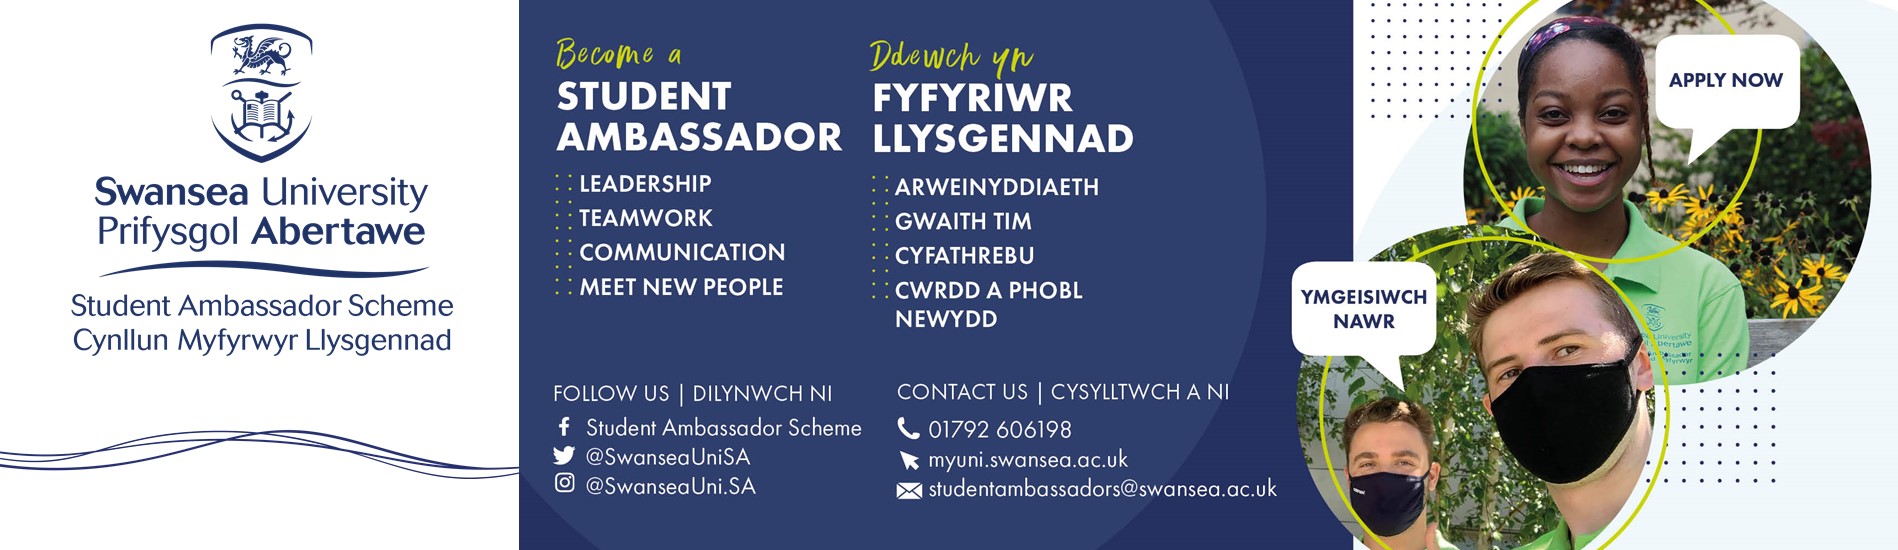 Student Ambassador Scheme Recruitment banner and logo